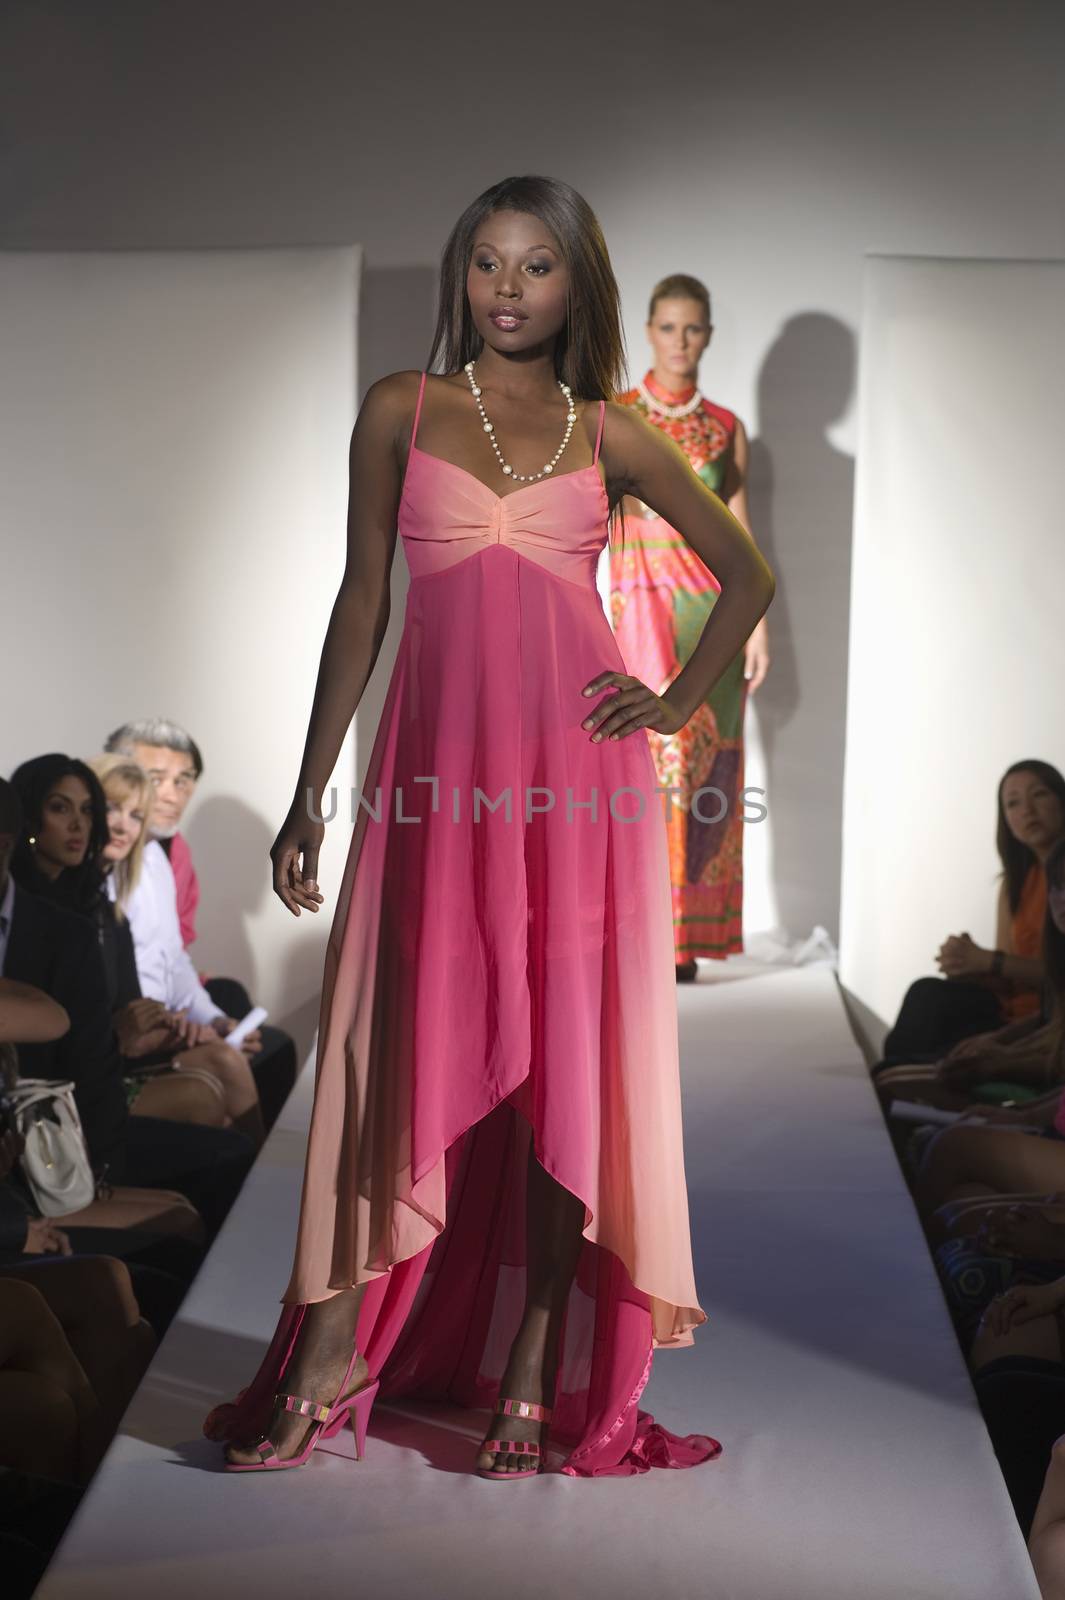 Woman in pink dress on fashion catwalk by moodboard